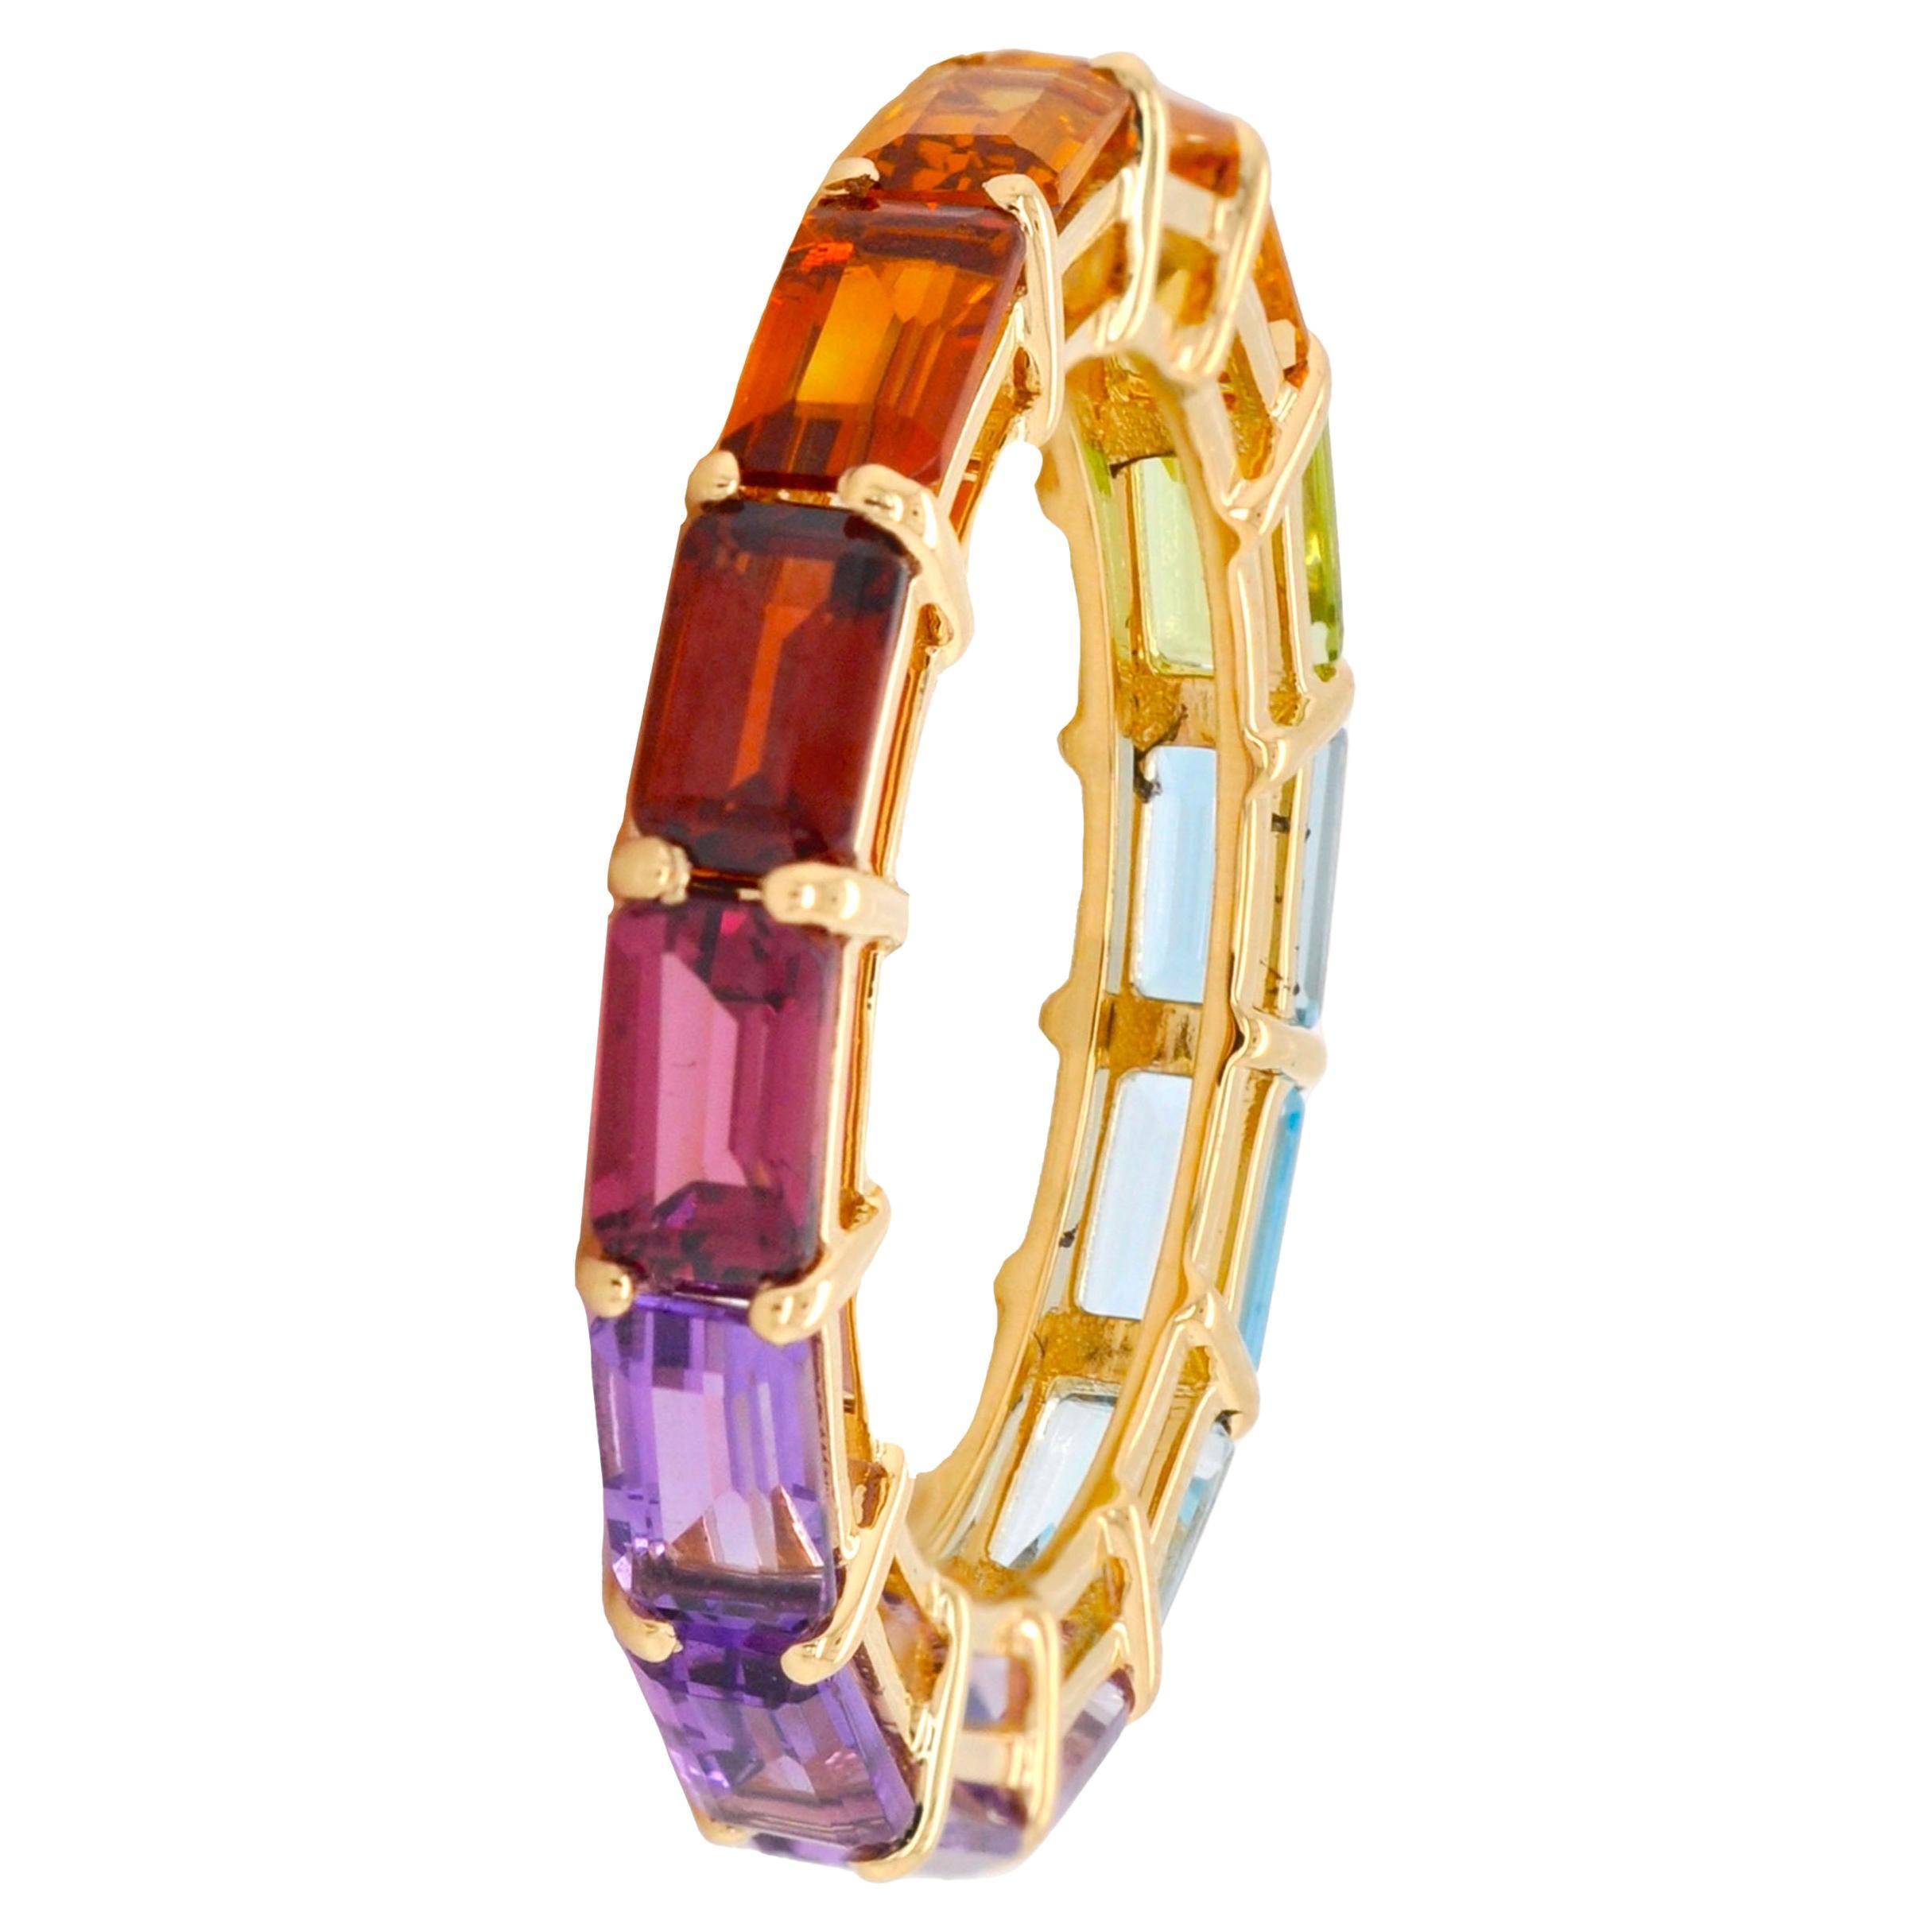 En vente :  Anneau d'éternité en or 18 carats serti de pierres précieuses octogonales multicolores arc-en-ciel